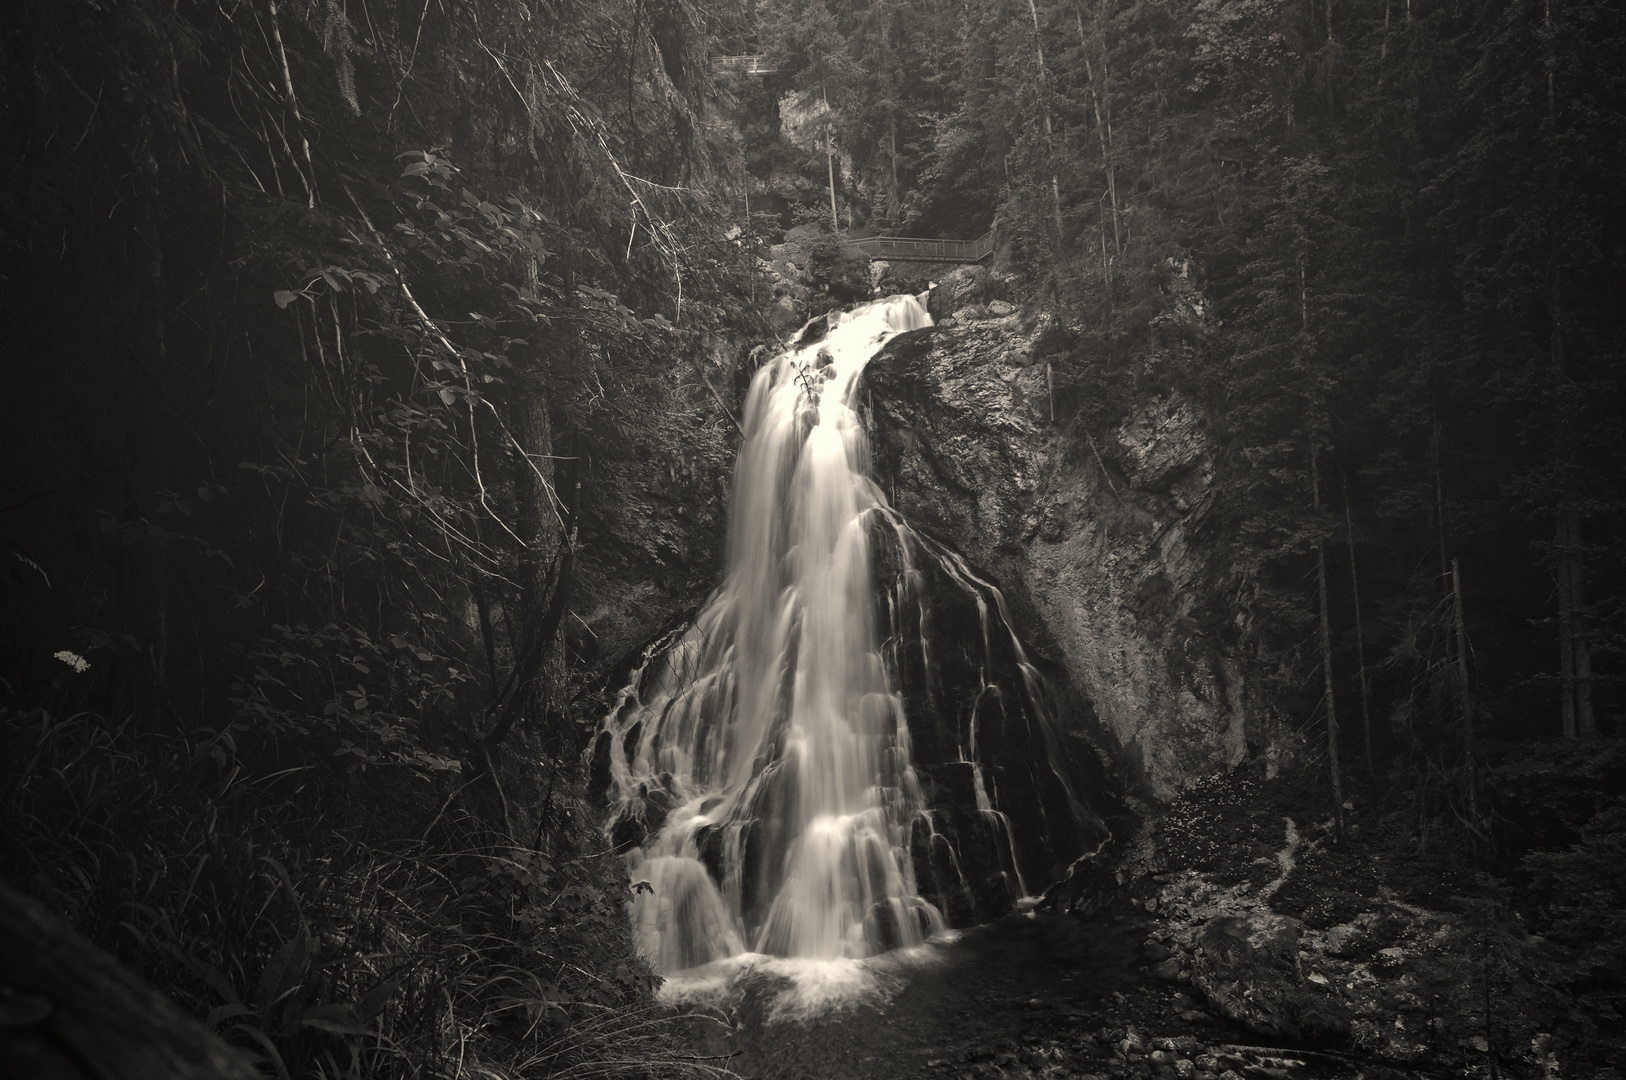 Gollinger Wasserfall, 1250 ISO, f8, 1/6 sek. mittels ND-Filter